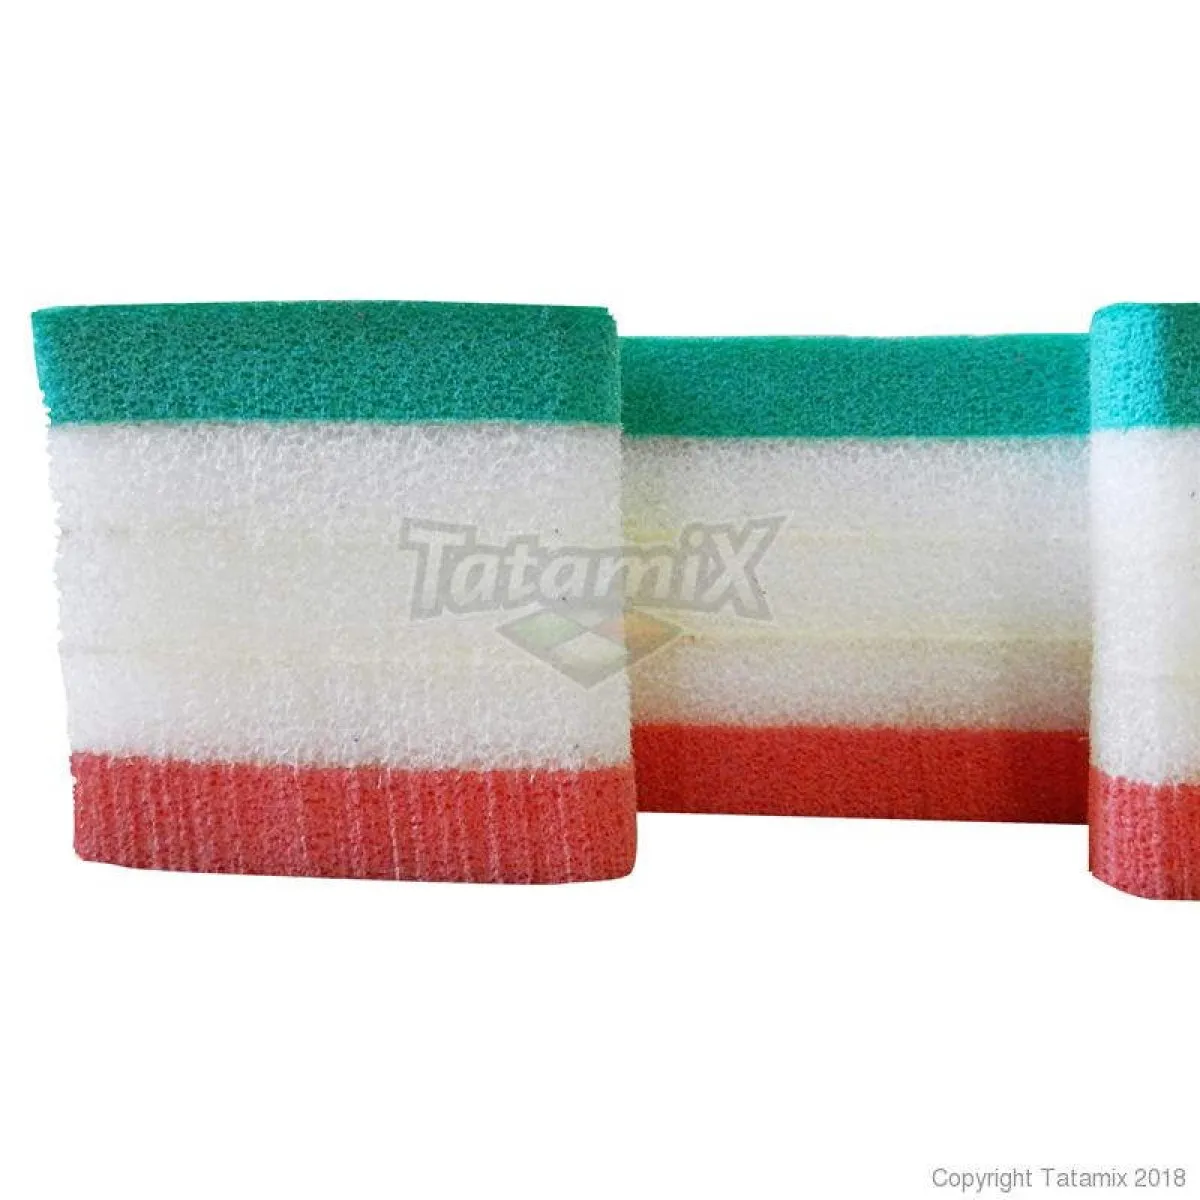 Tatami J50R mat red/white/green 100 cm x 100 cm x 5 cm